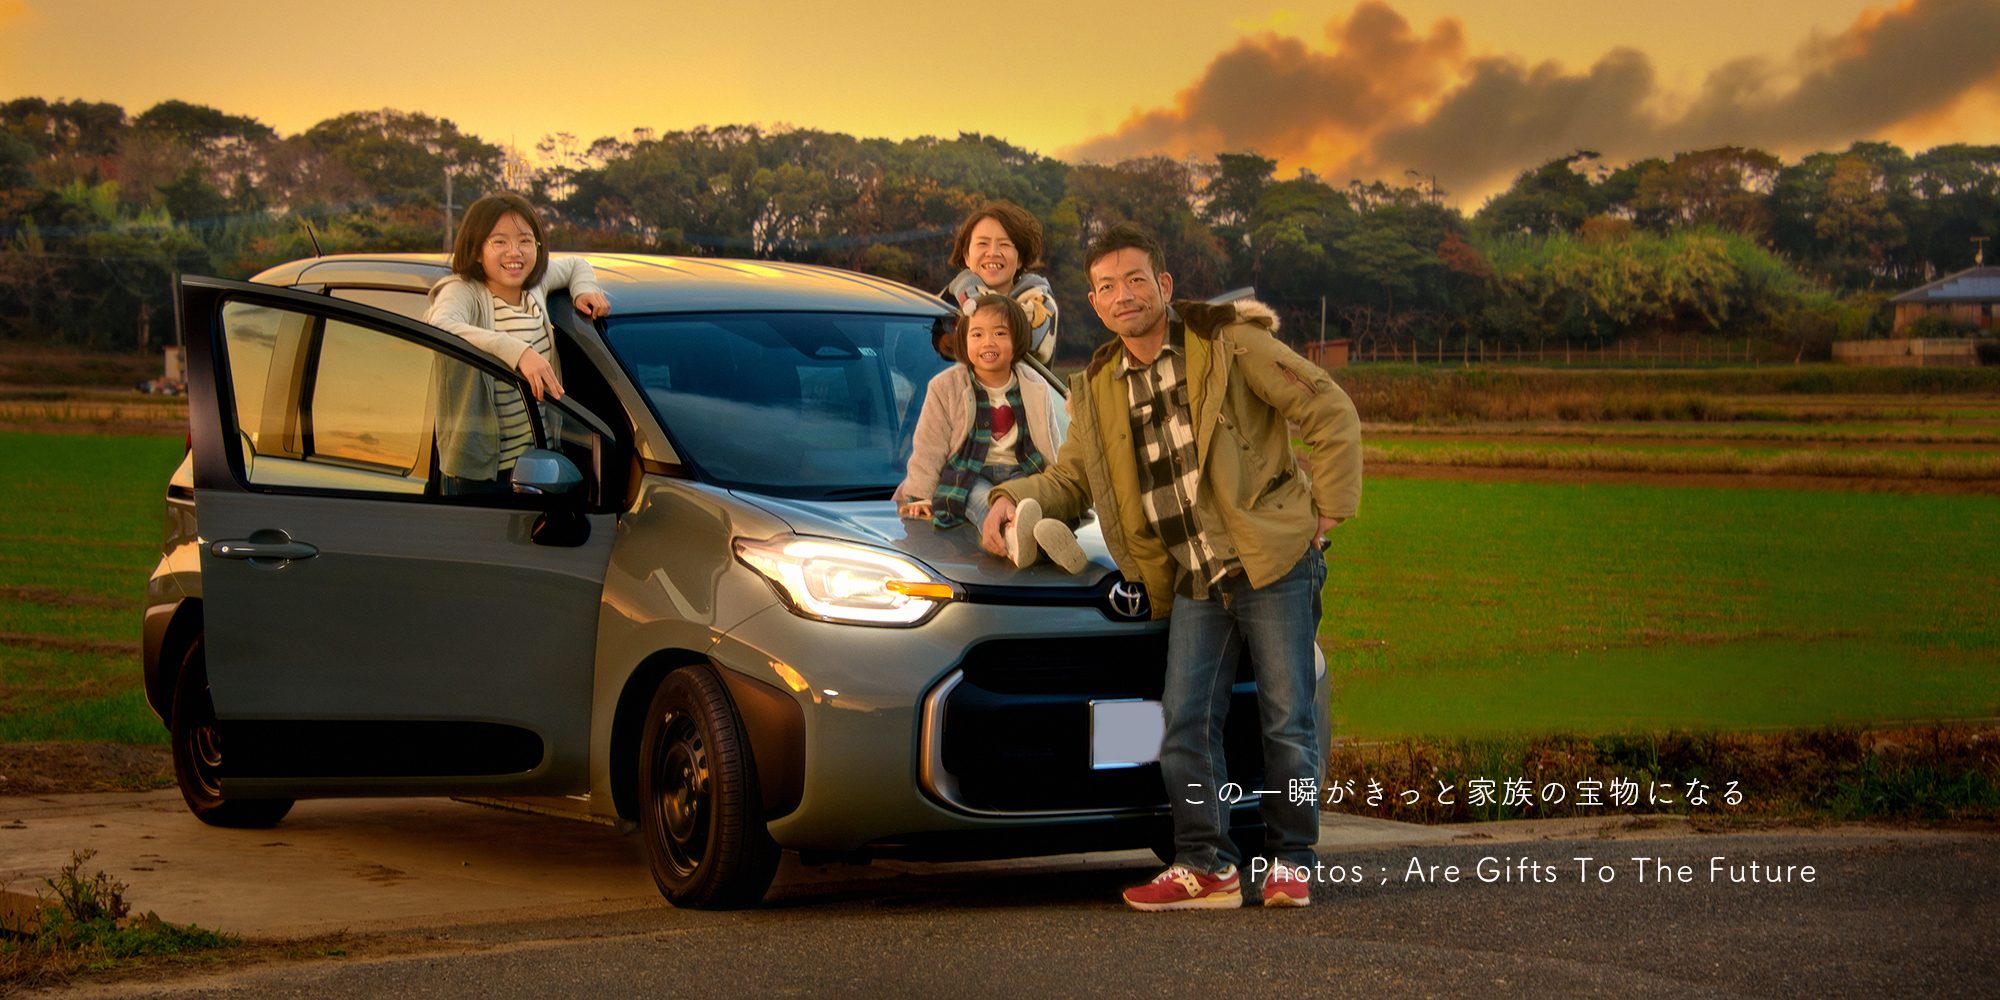 <img src=”https://www.studio-genyo.com/cwp/wp-content/uploads/2018/04/DSC_8035-1.jpg”alt=”新車と一緒に家族写真“>